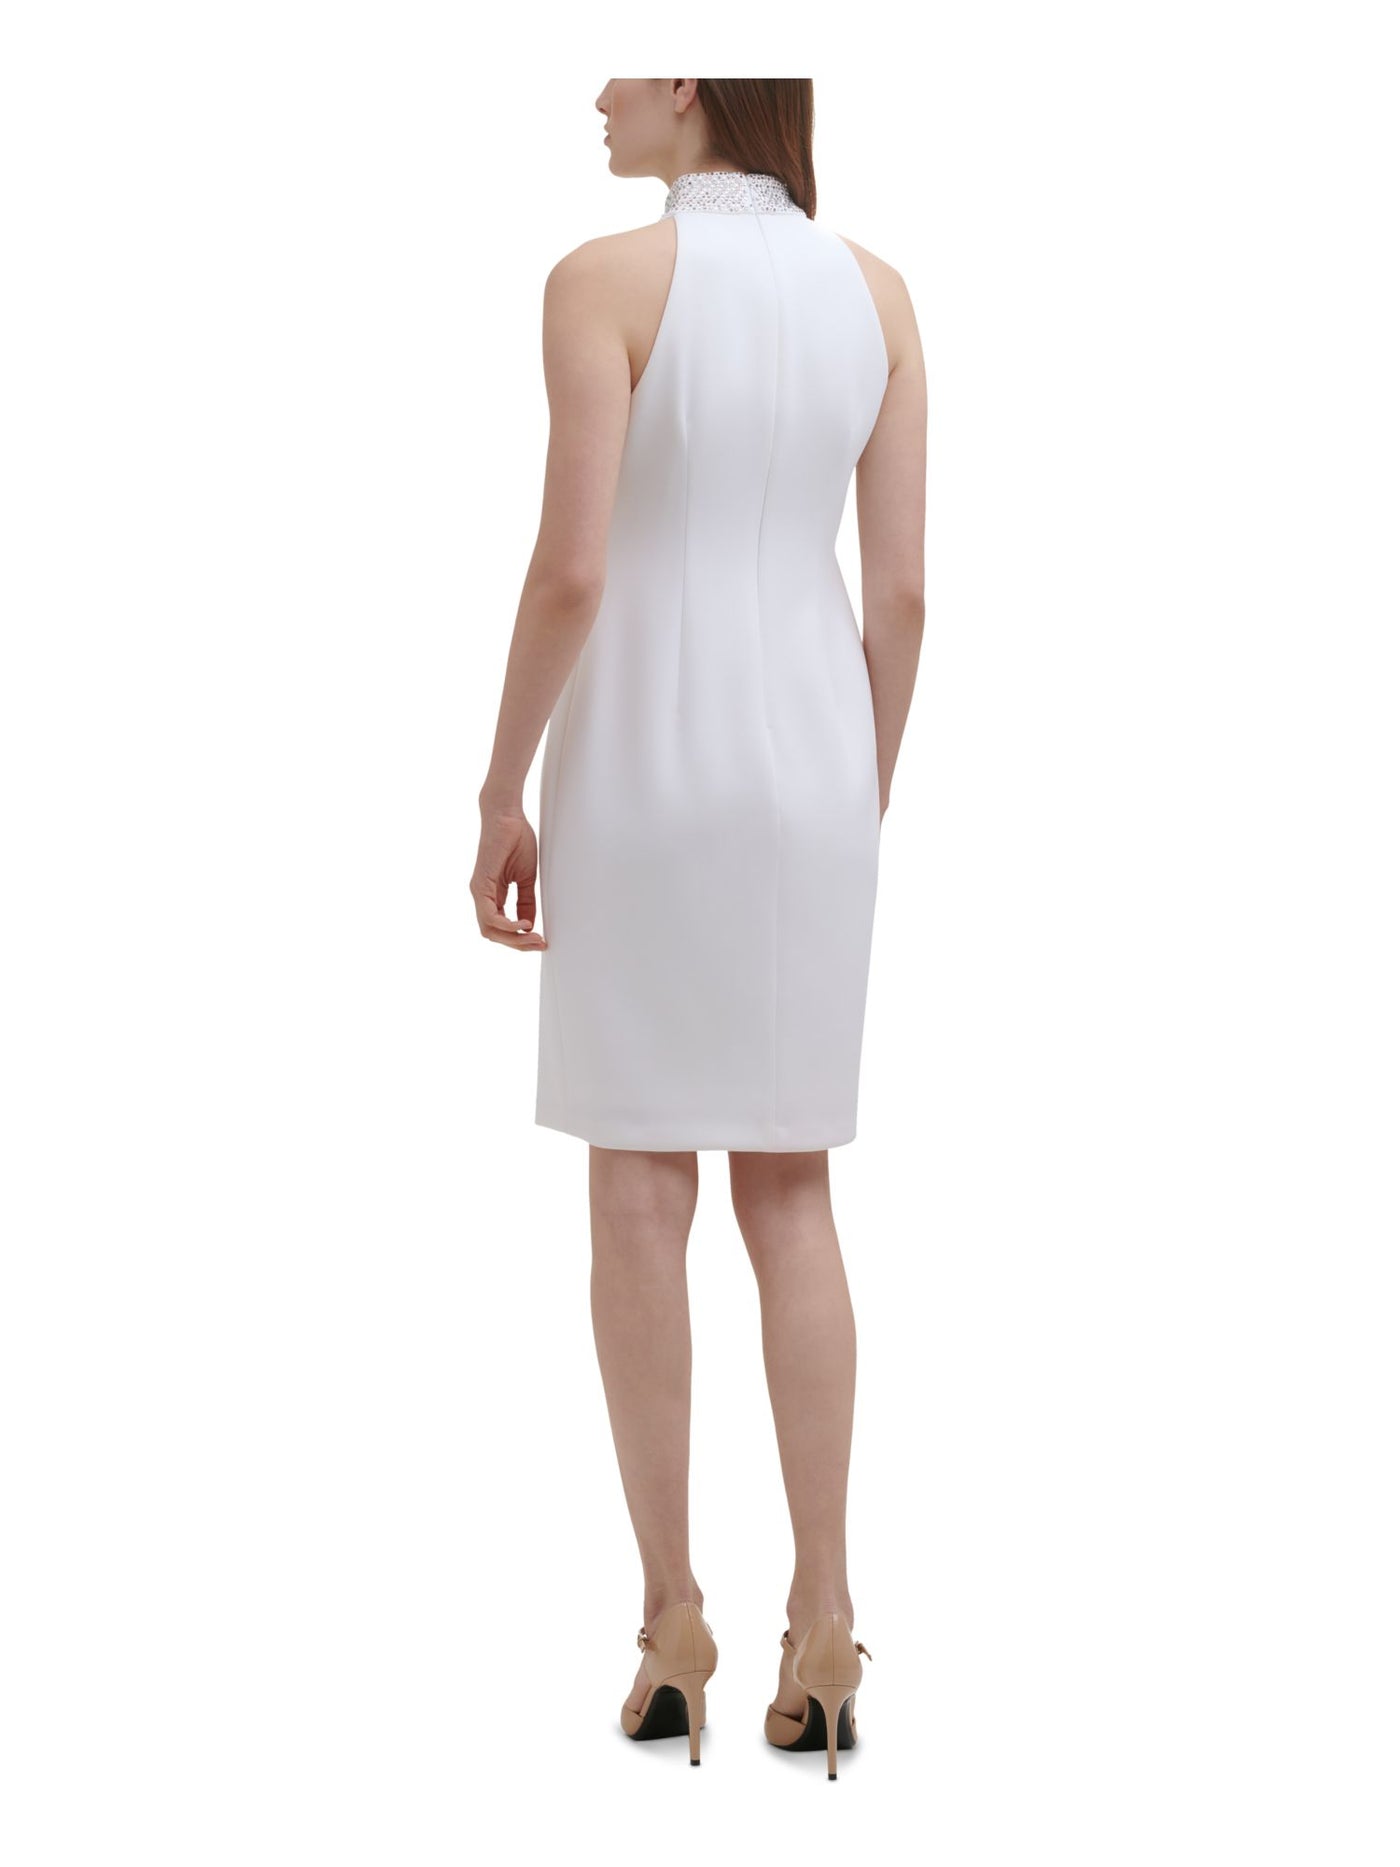 CALVIN KLEIN Womens White Stretch Embellished Zippered Sleeveless Mock Neck Above The Knee Formal Sheath Dress 6